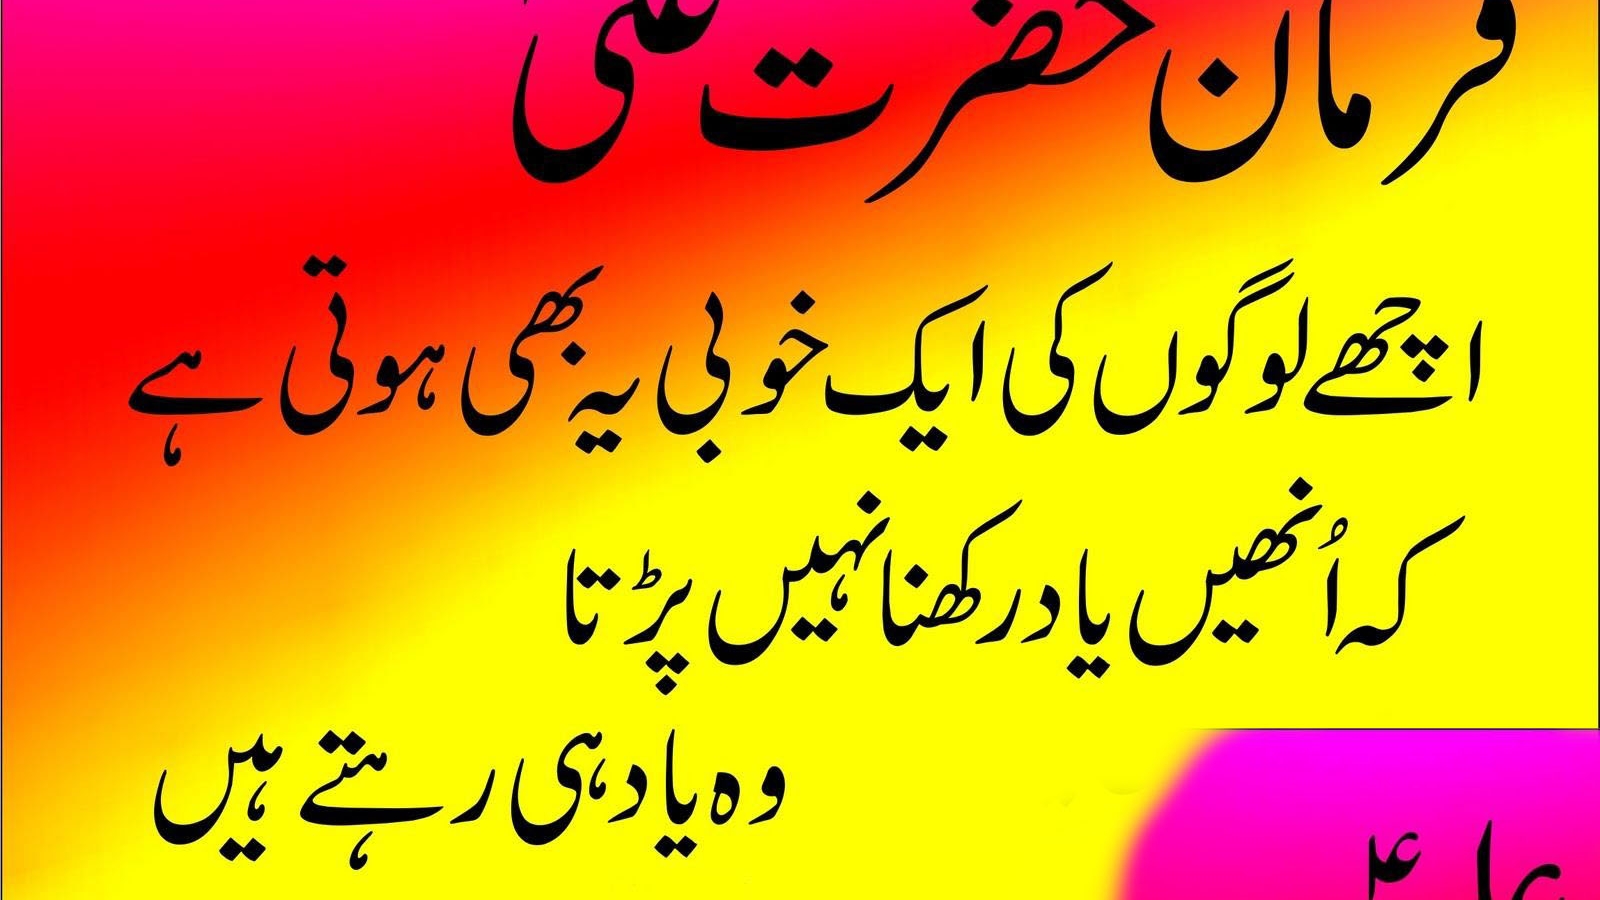 Name Wallpapers For Mobile Wallpapers For Mobile Phone - Aqwal Hazrat Ali Ka Farman , HD Wallpaper & Backgrounds